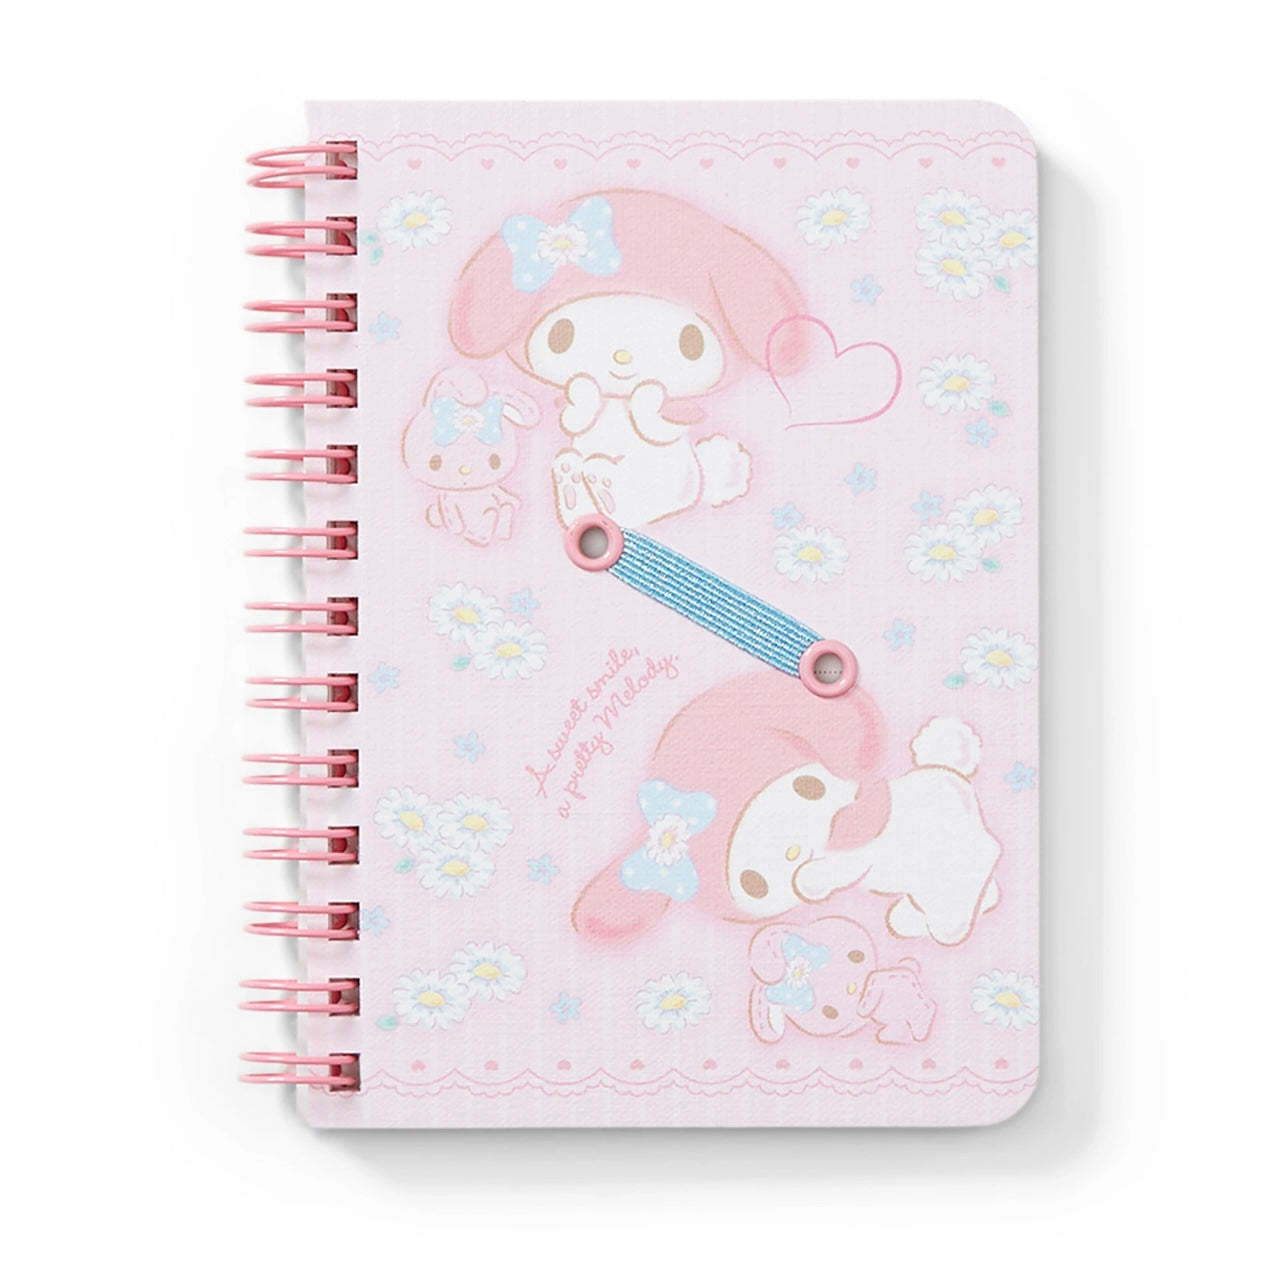 Sanrio Characters B5 Notebook Cinnamoroll and Milk